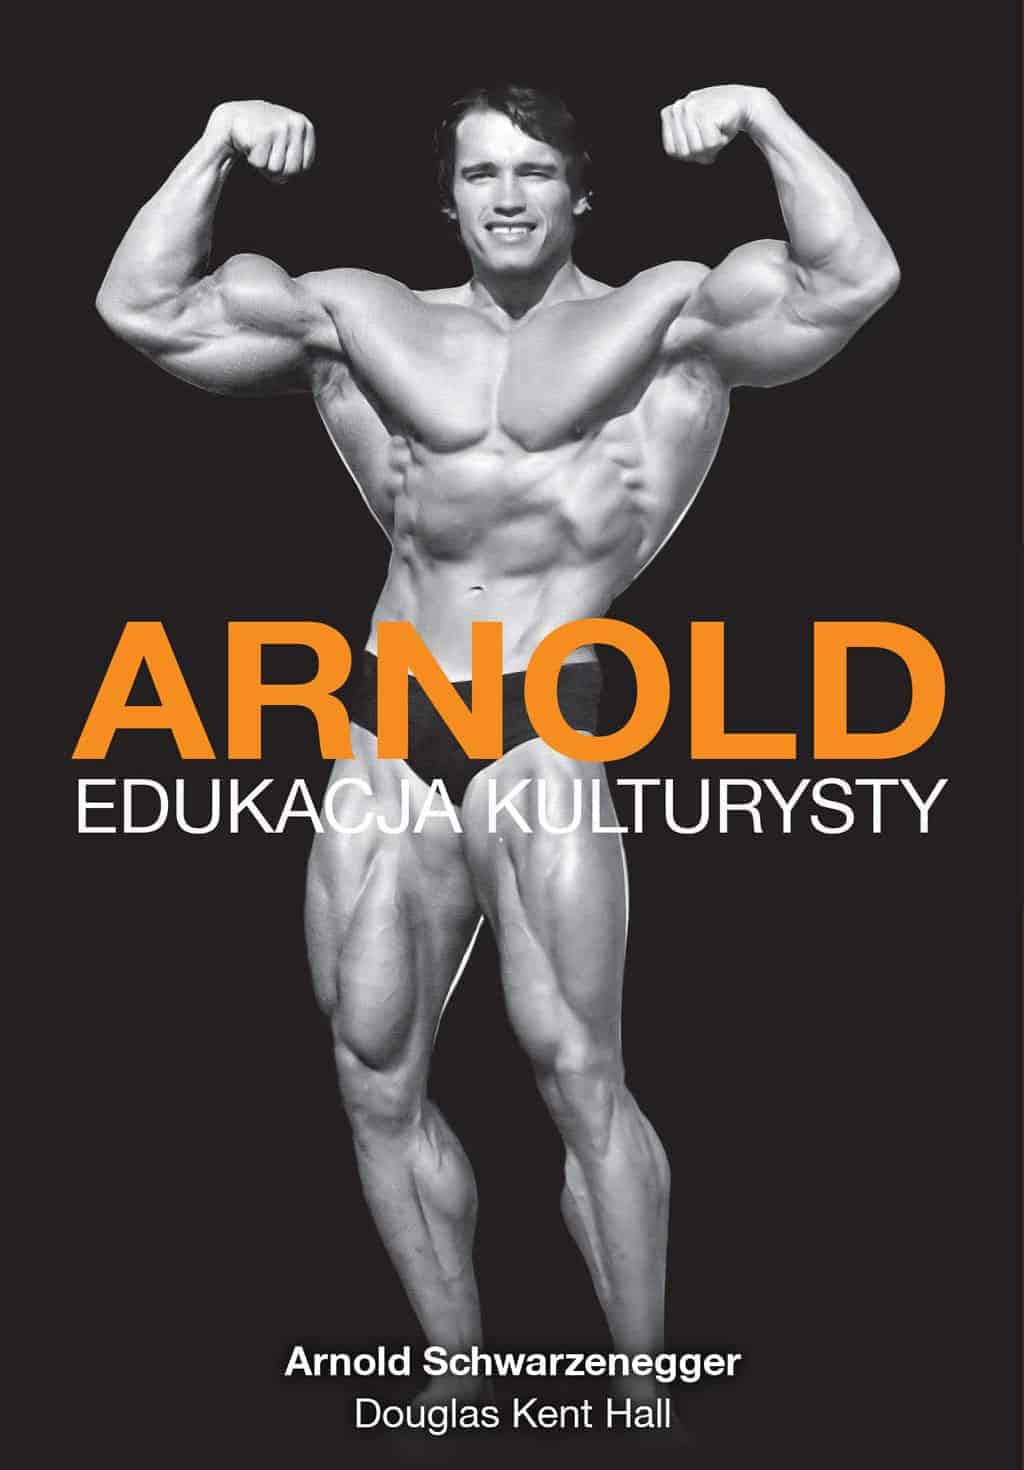 okładka książki Arnold edukacja kulturysty